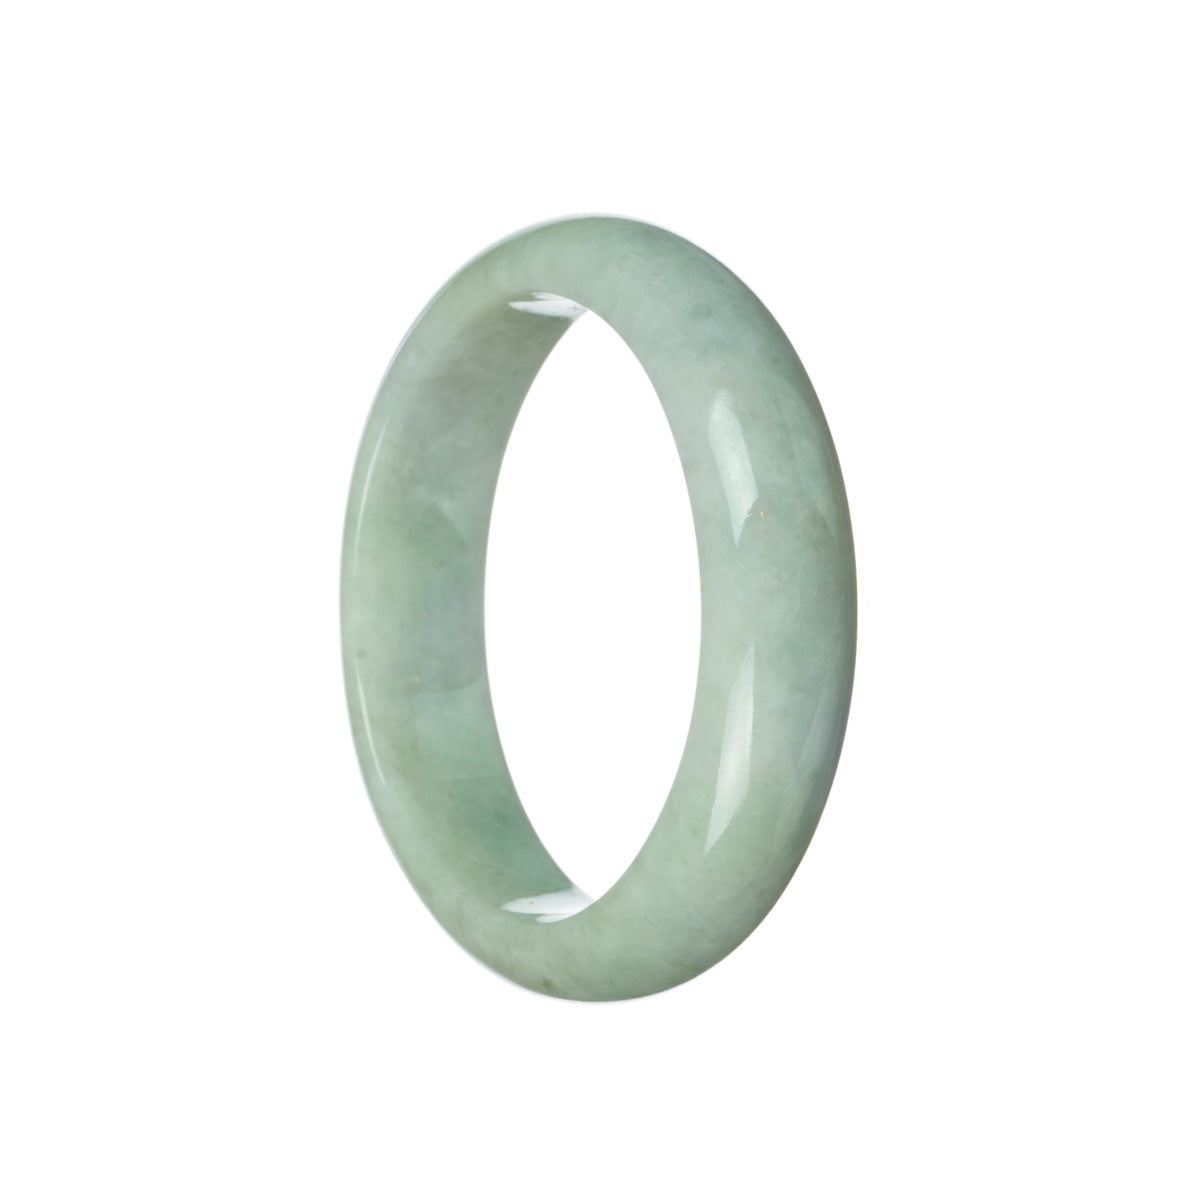 Authentic Grade A Pale green and lavender Burma Jade Bangle Bracelet - 59mm Half Moon